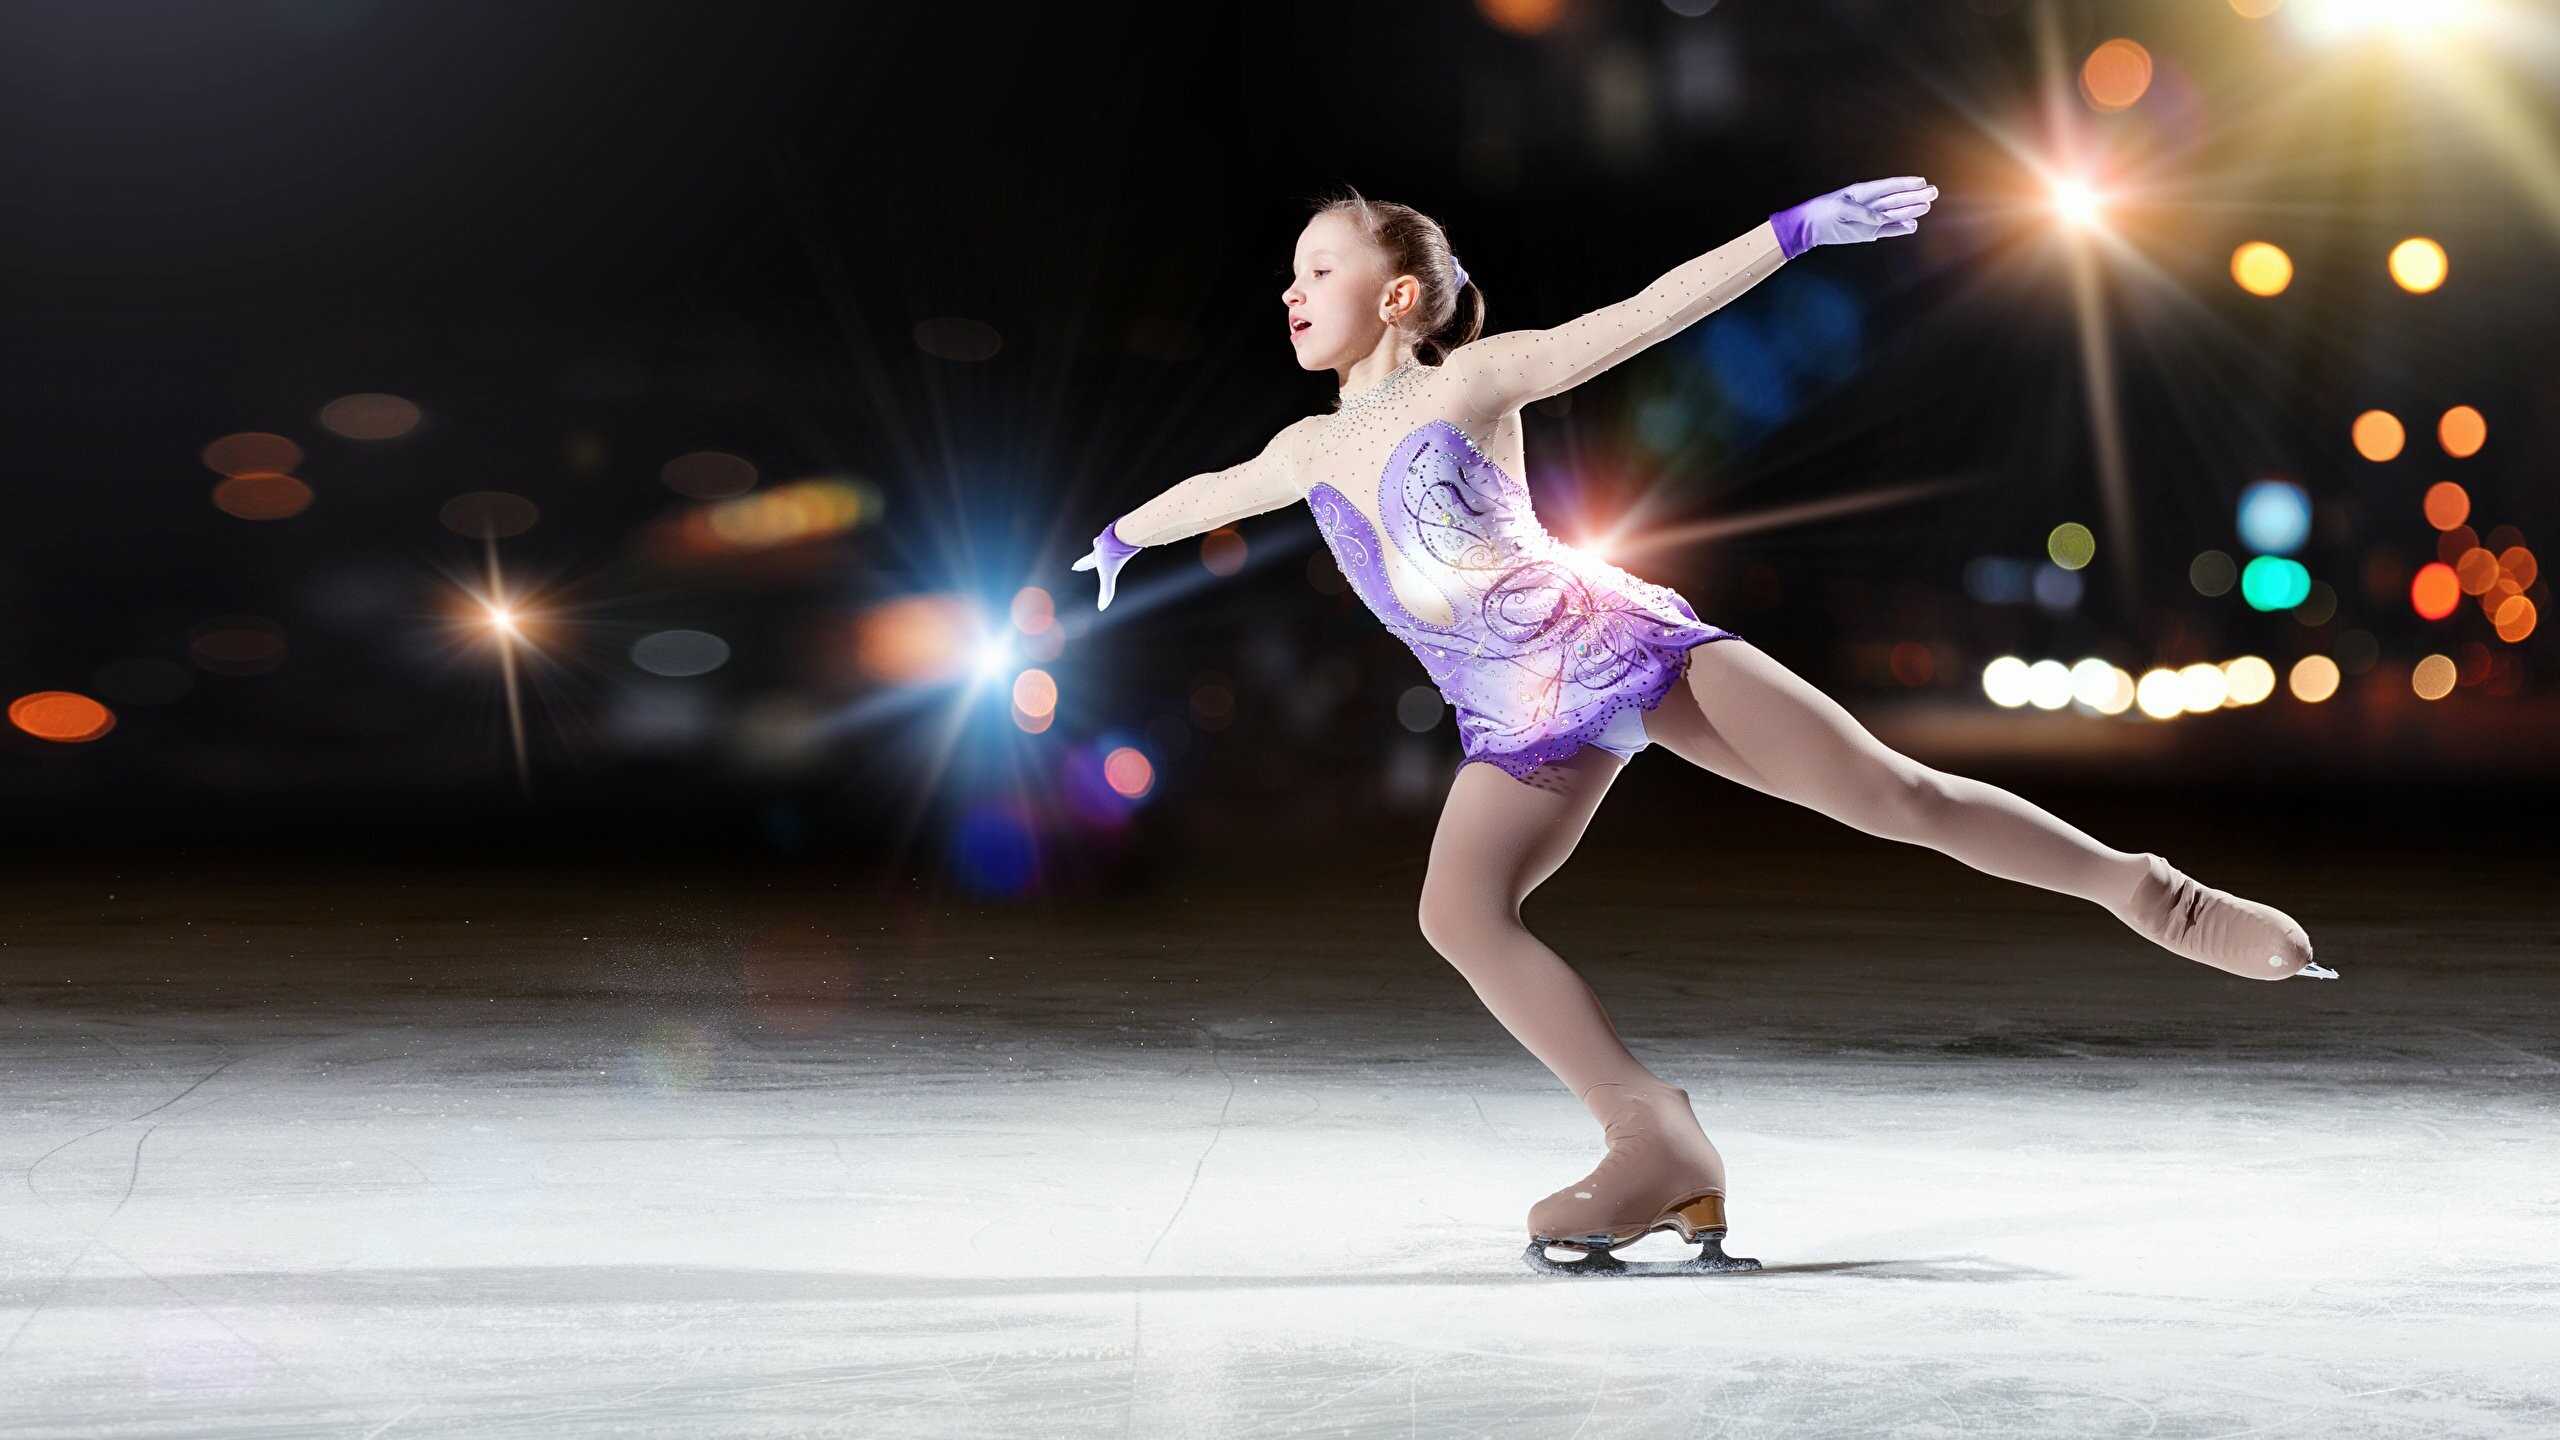 Alexandra Trusova, Ice skating practice, Figure skating tips, Professional guidance, 2560x1440 HD Desktop